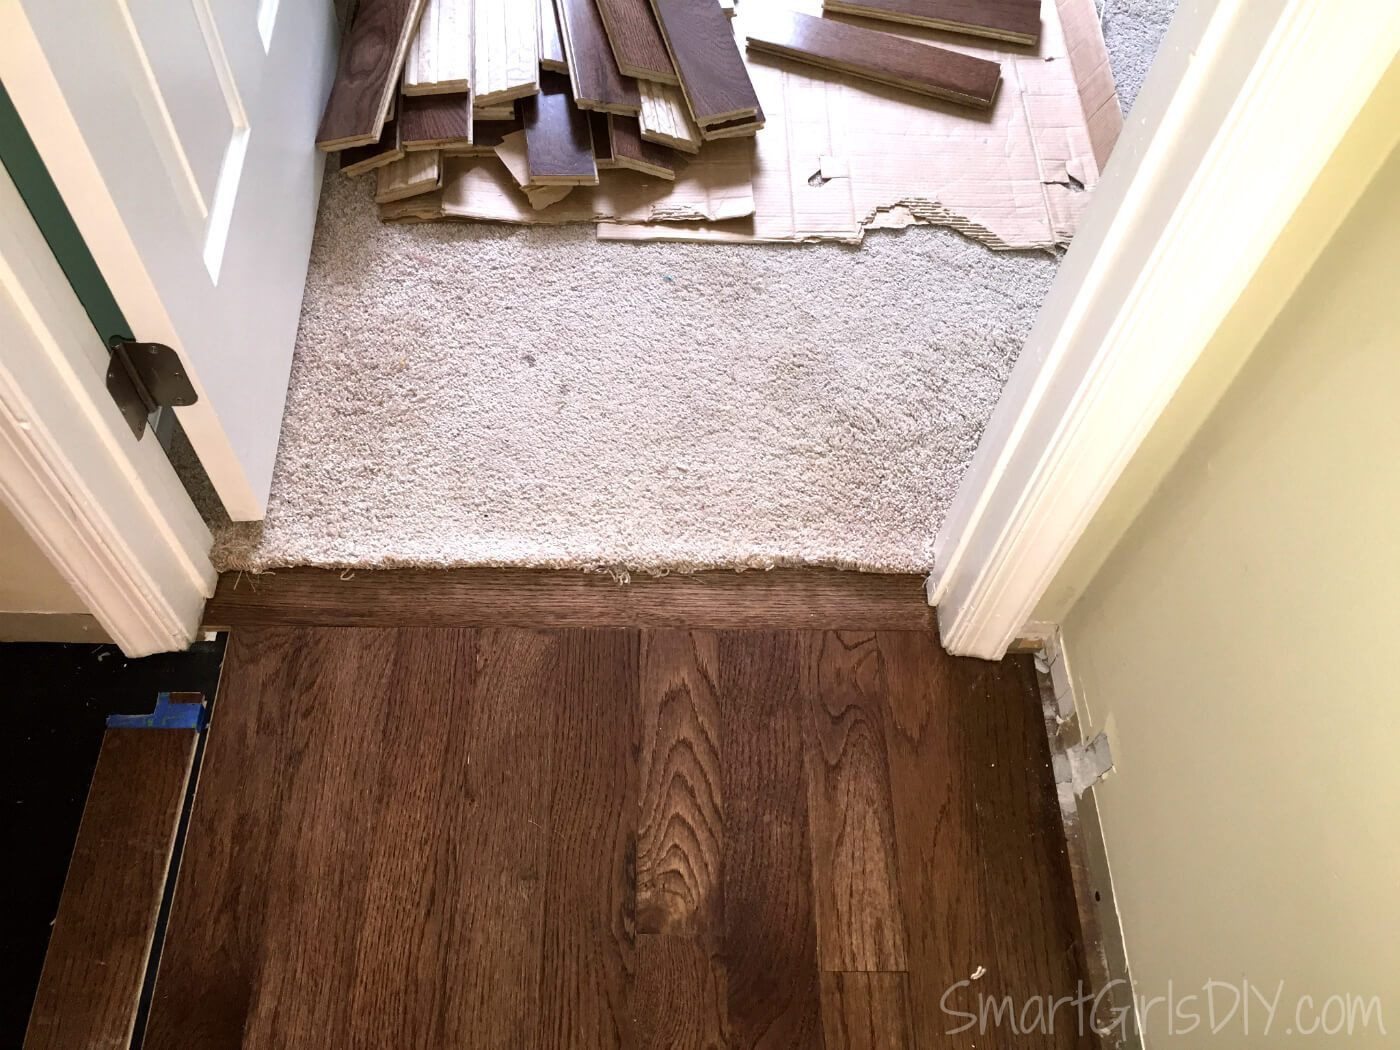 hardwood flooring labor cost of upstairs hallway 1 installing hardwood floors within transition between carpet and hardwood floor